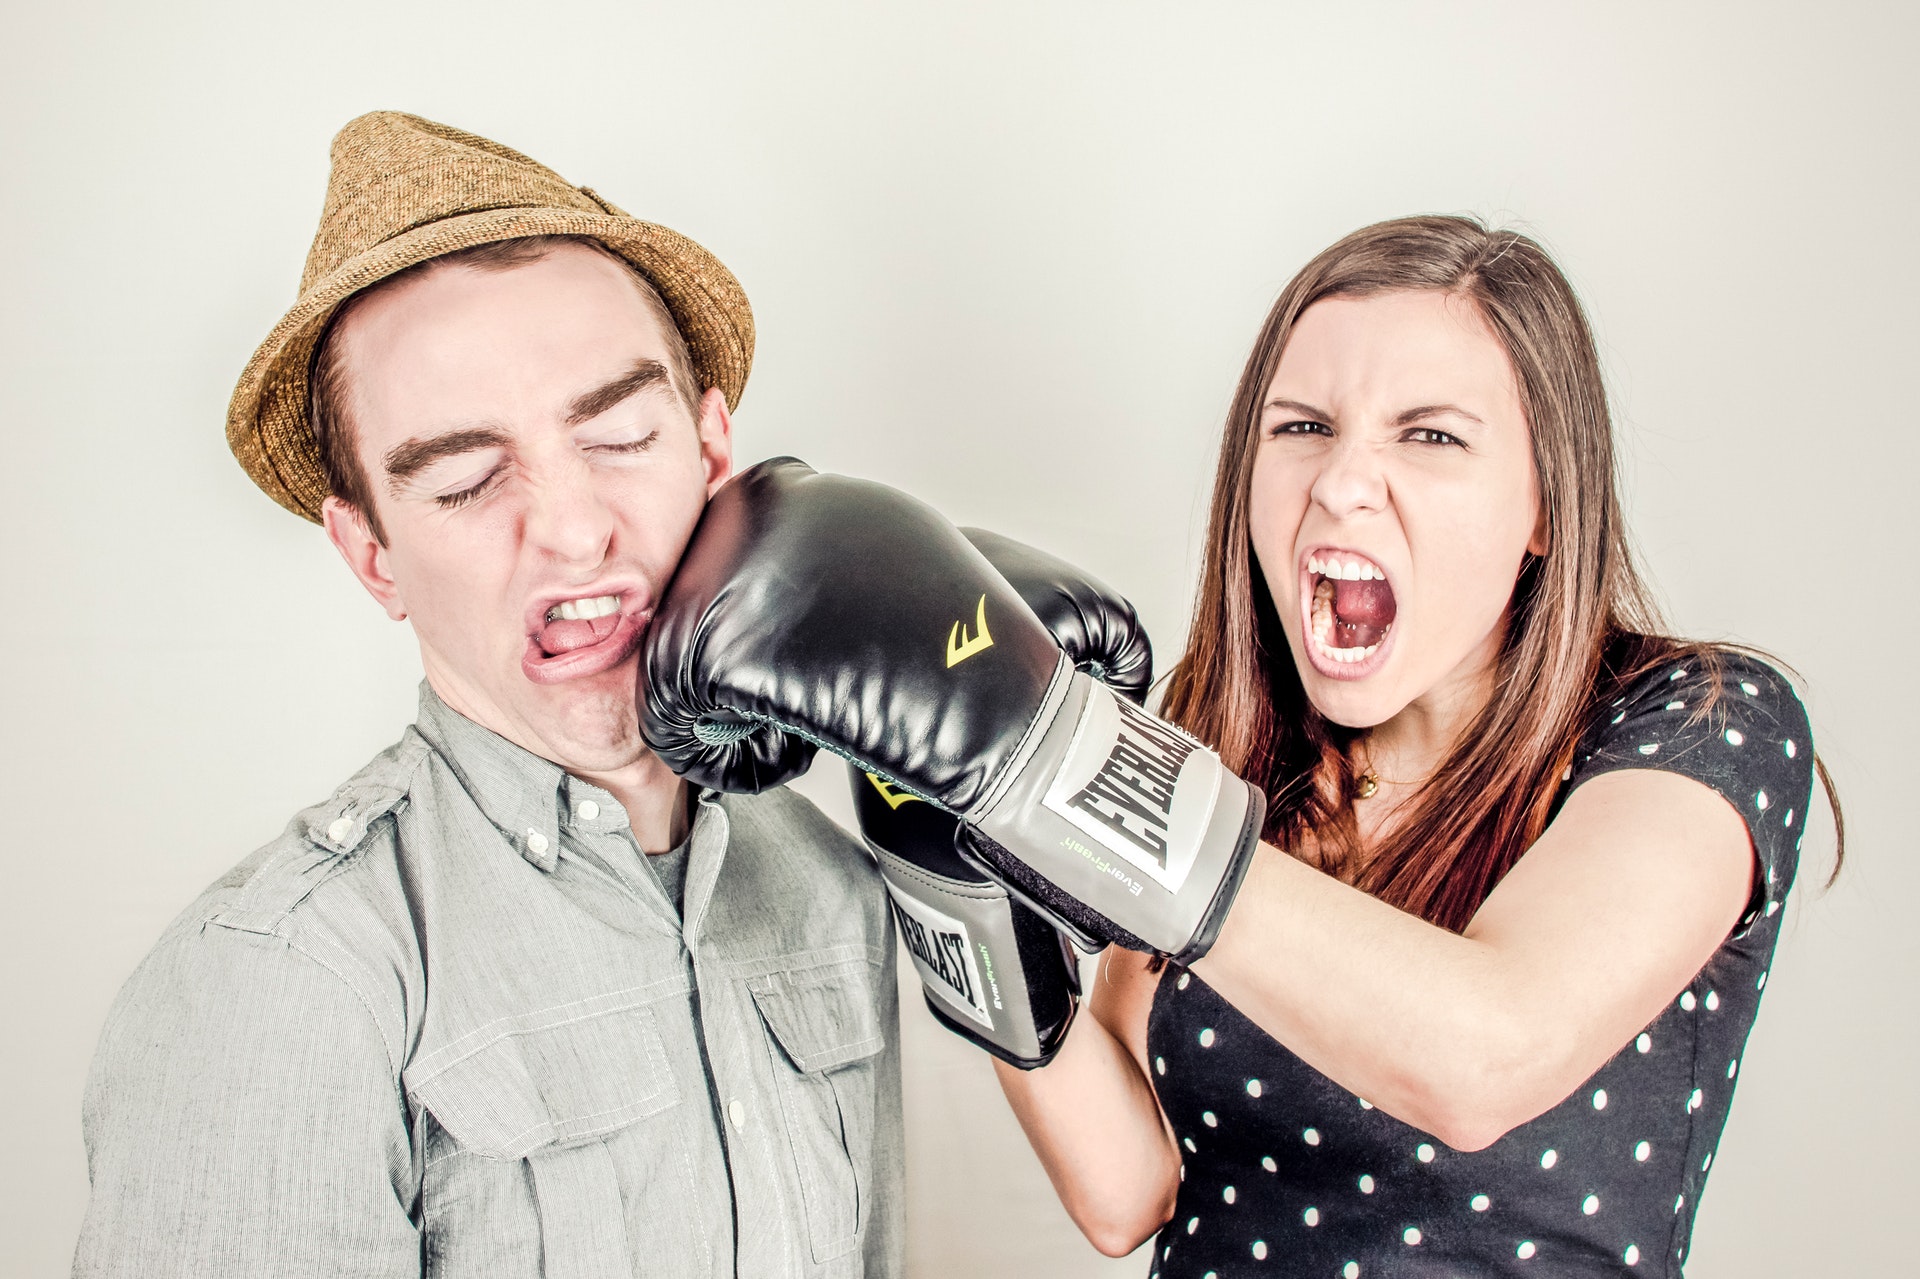 Woman wearing boxing gloves punching man in face.